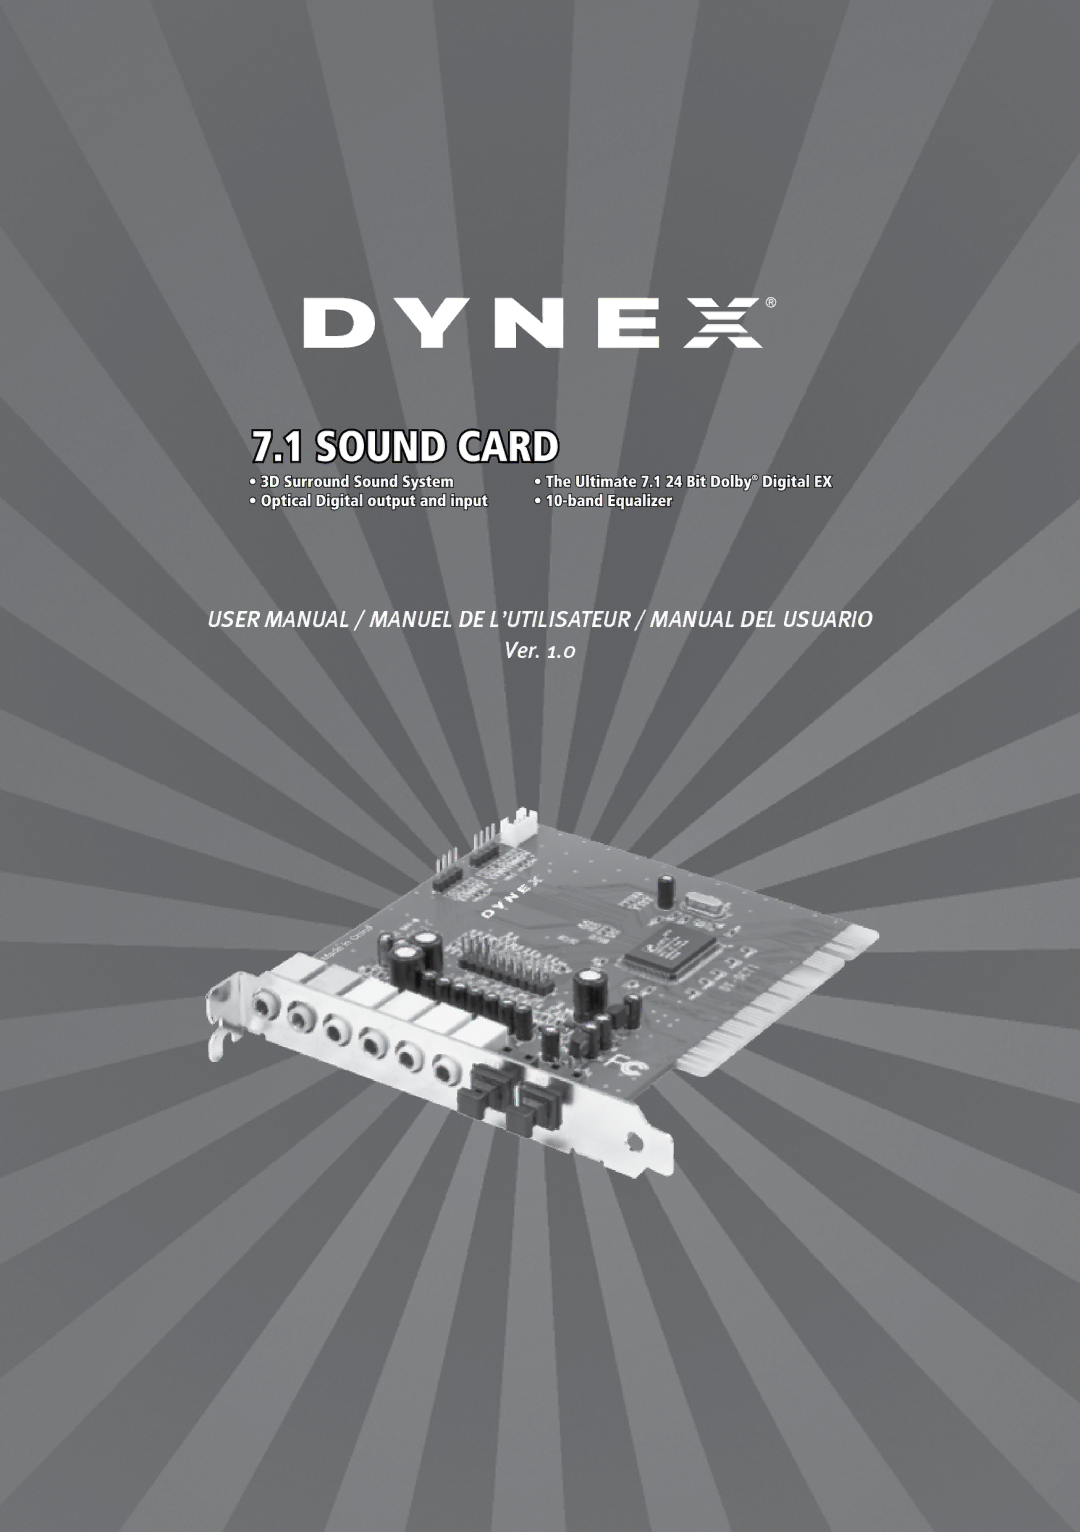 Dynex DX-SC71 user manual Ver 